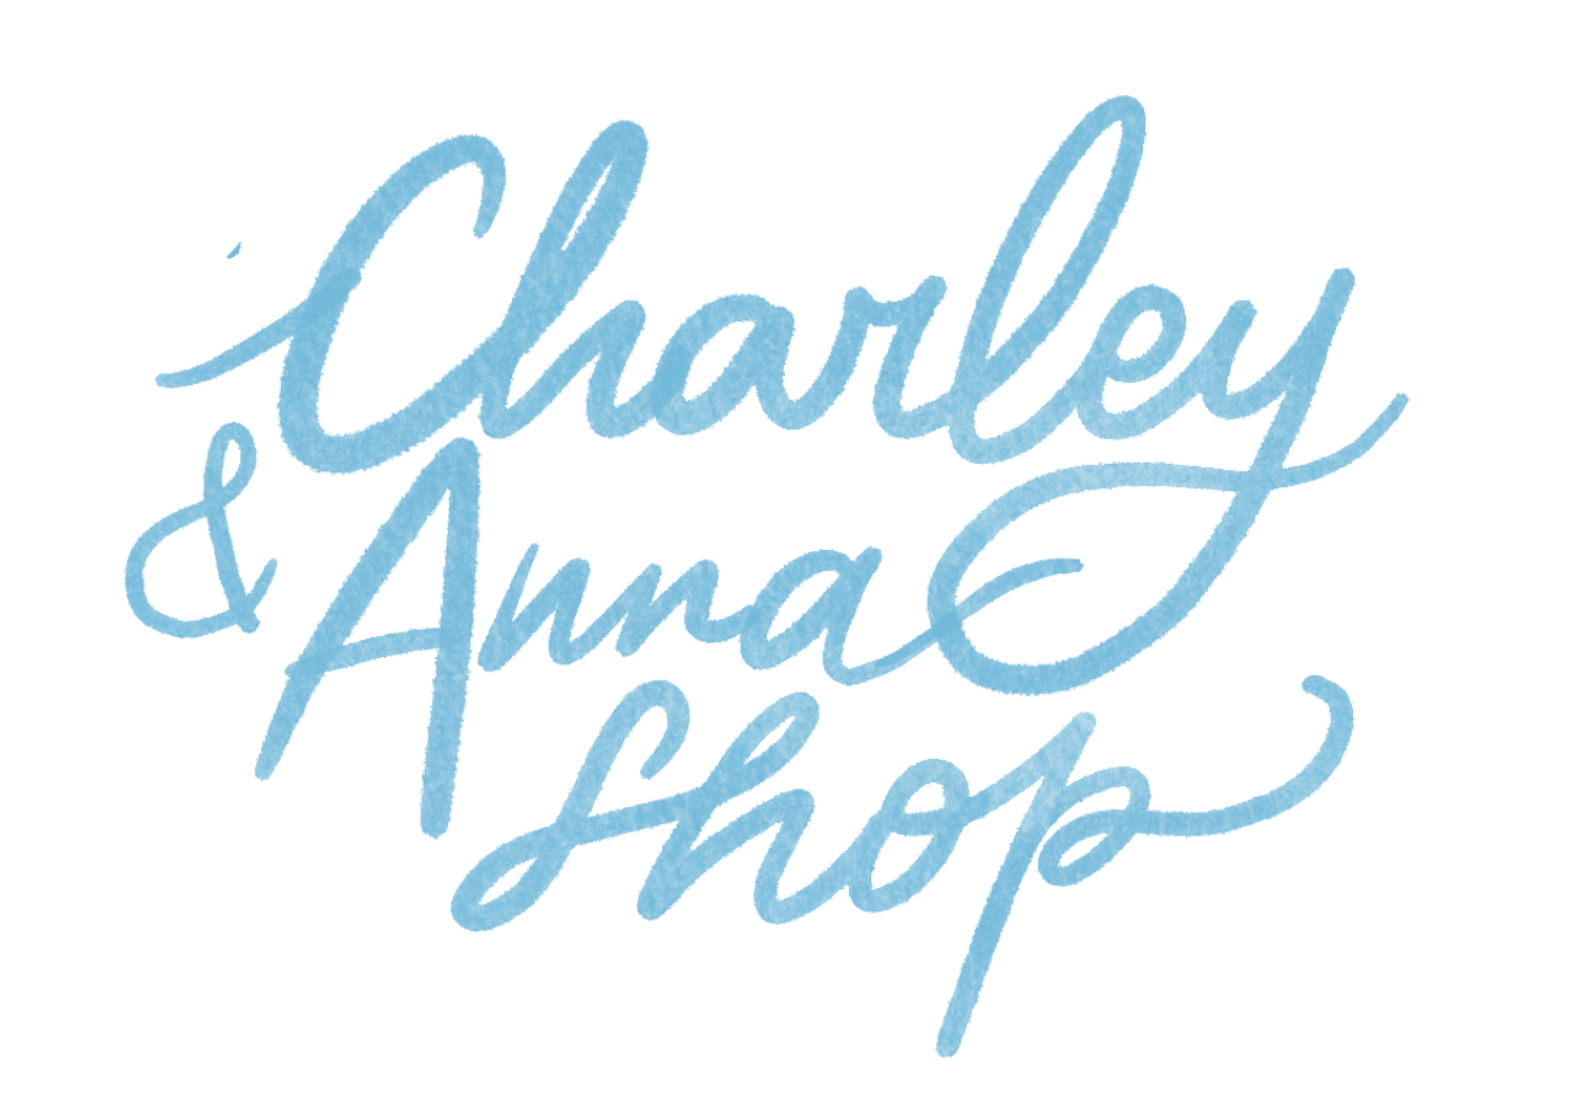 Charley e Anna Shop